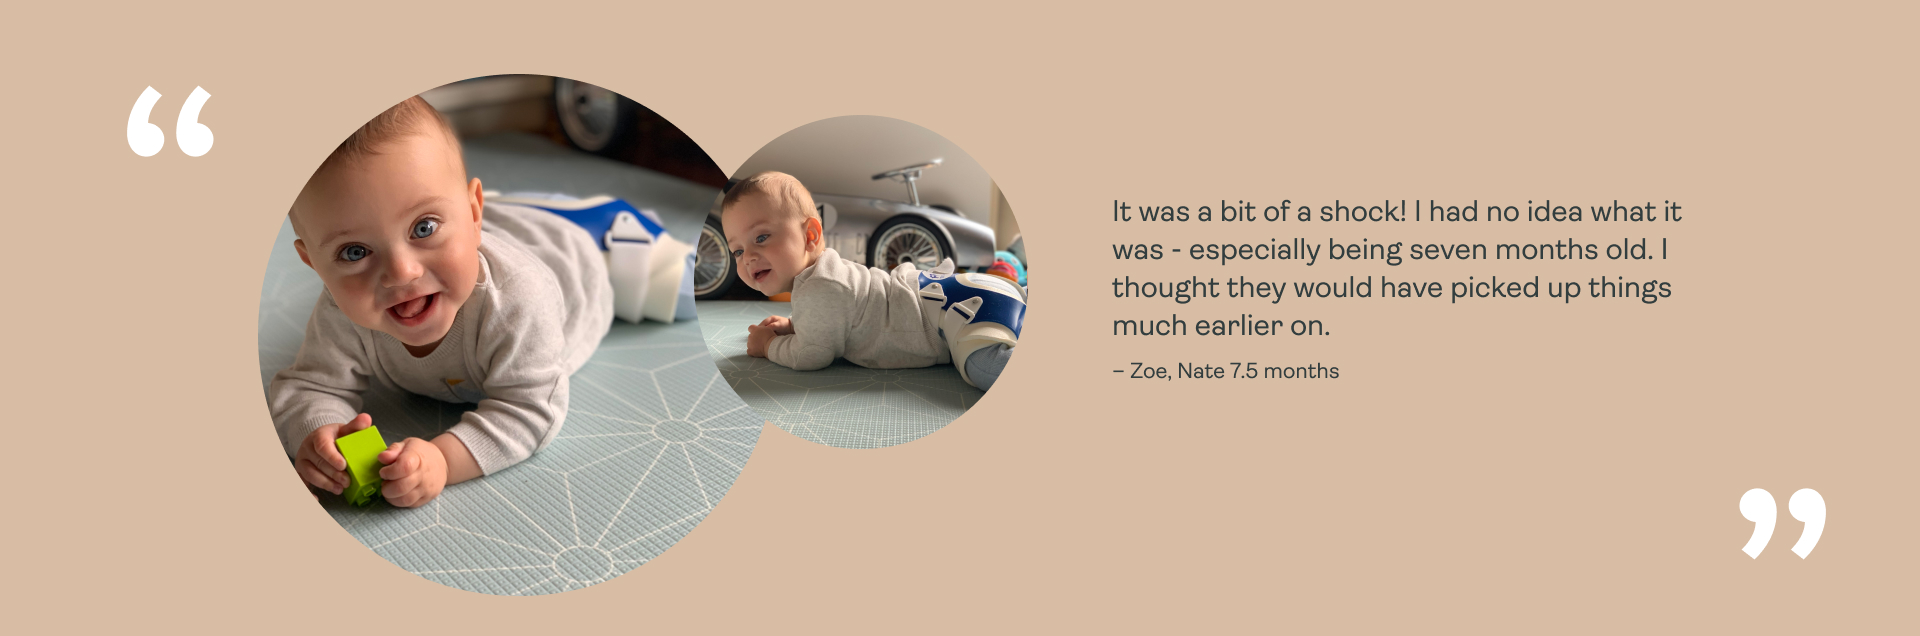 Mum Zoe explains son Nate's journey with hip dysplasia